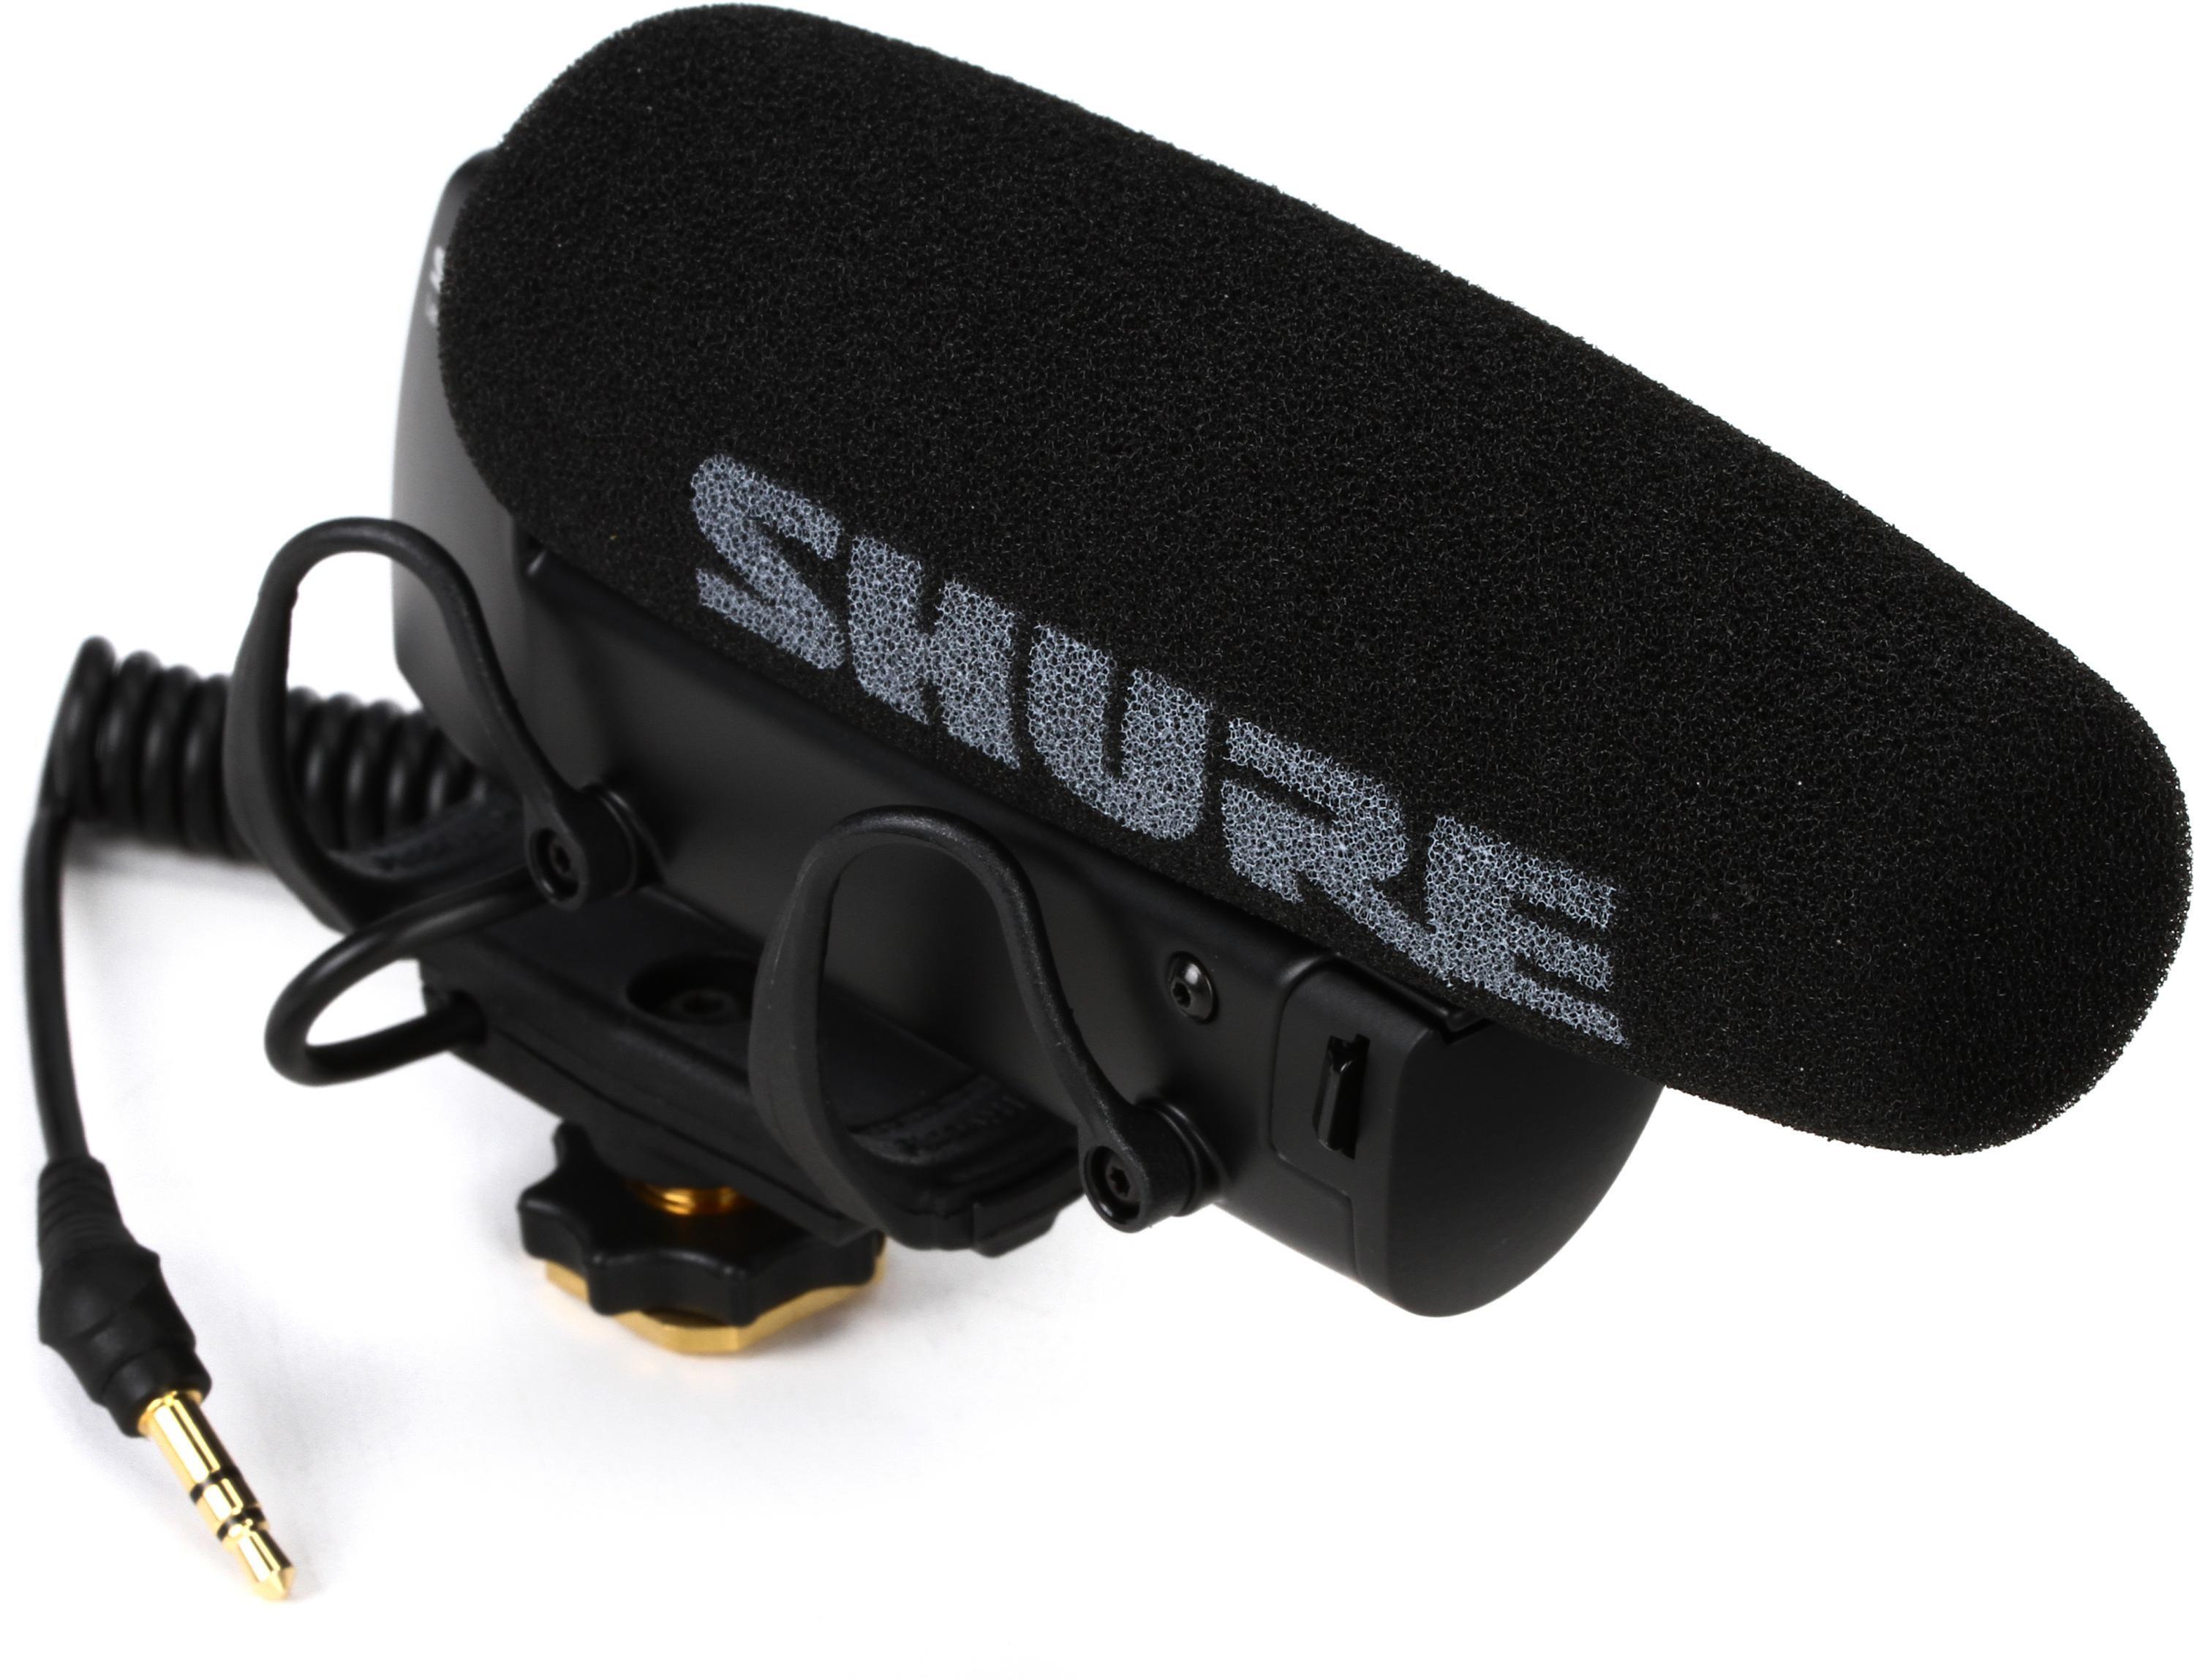 Shure VP83 LensHopper Camera-mount Compact Shotgun Microphone